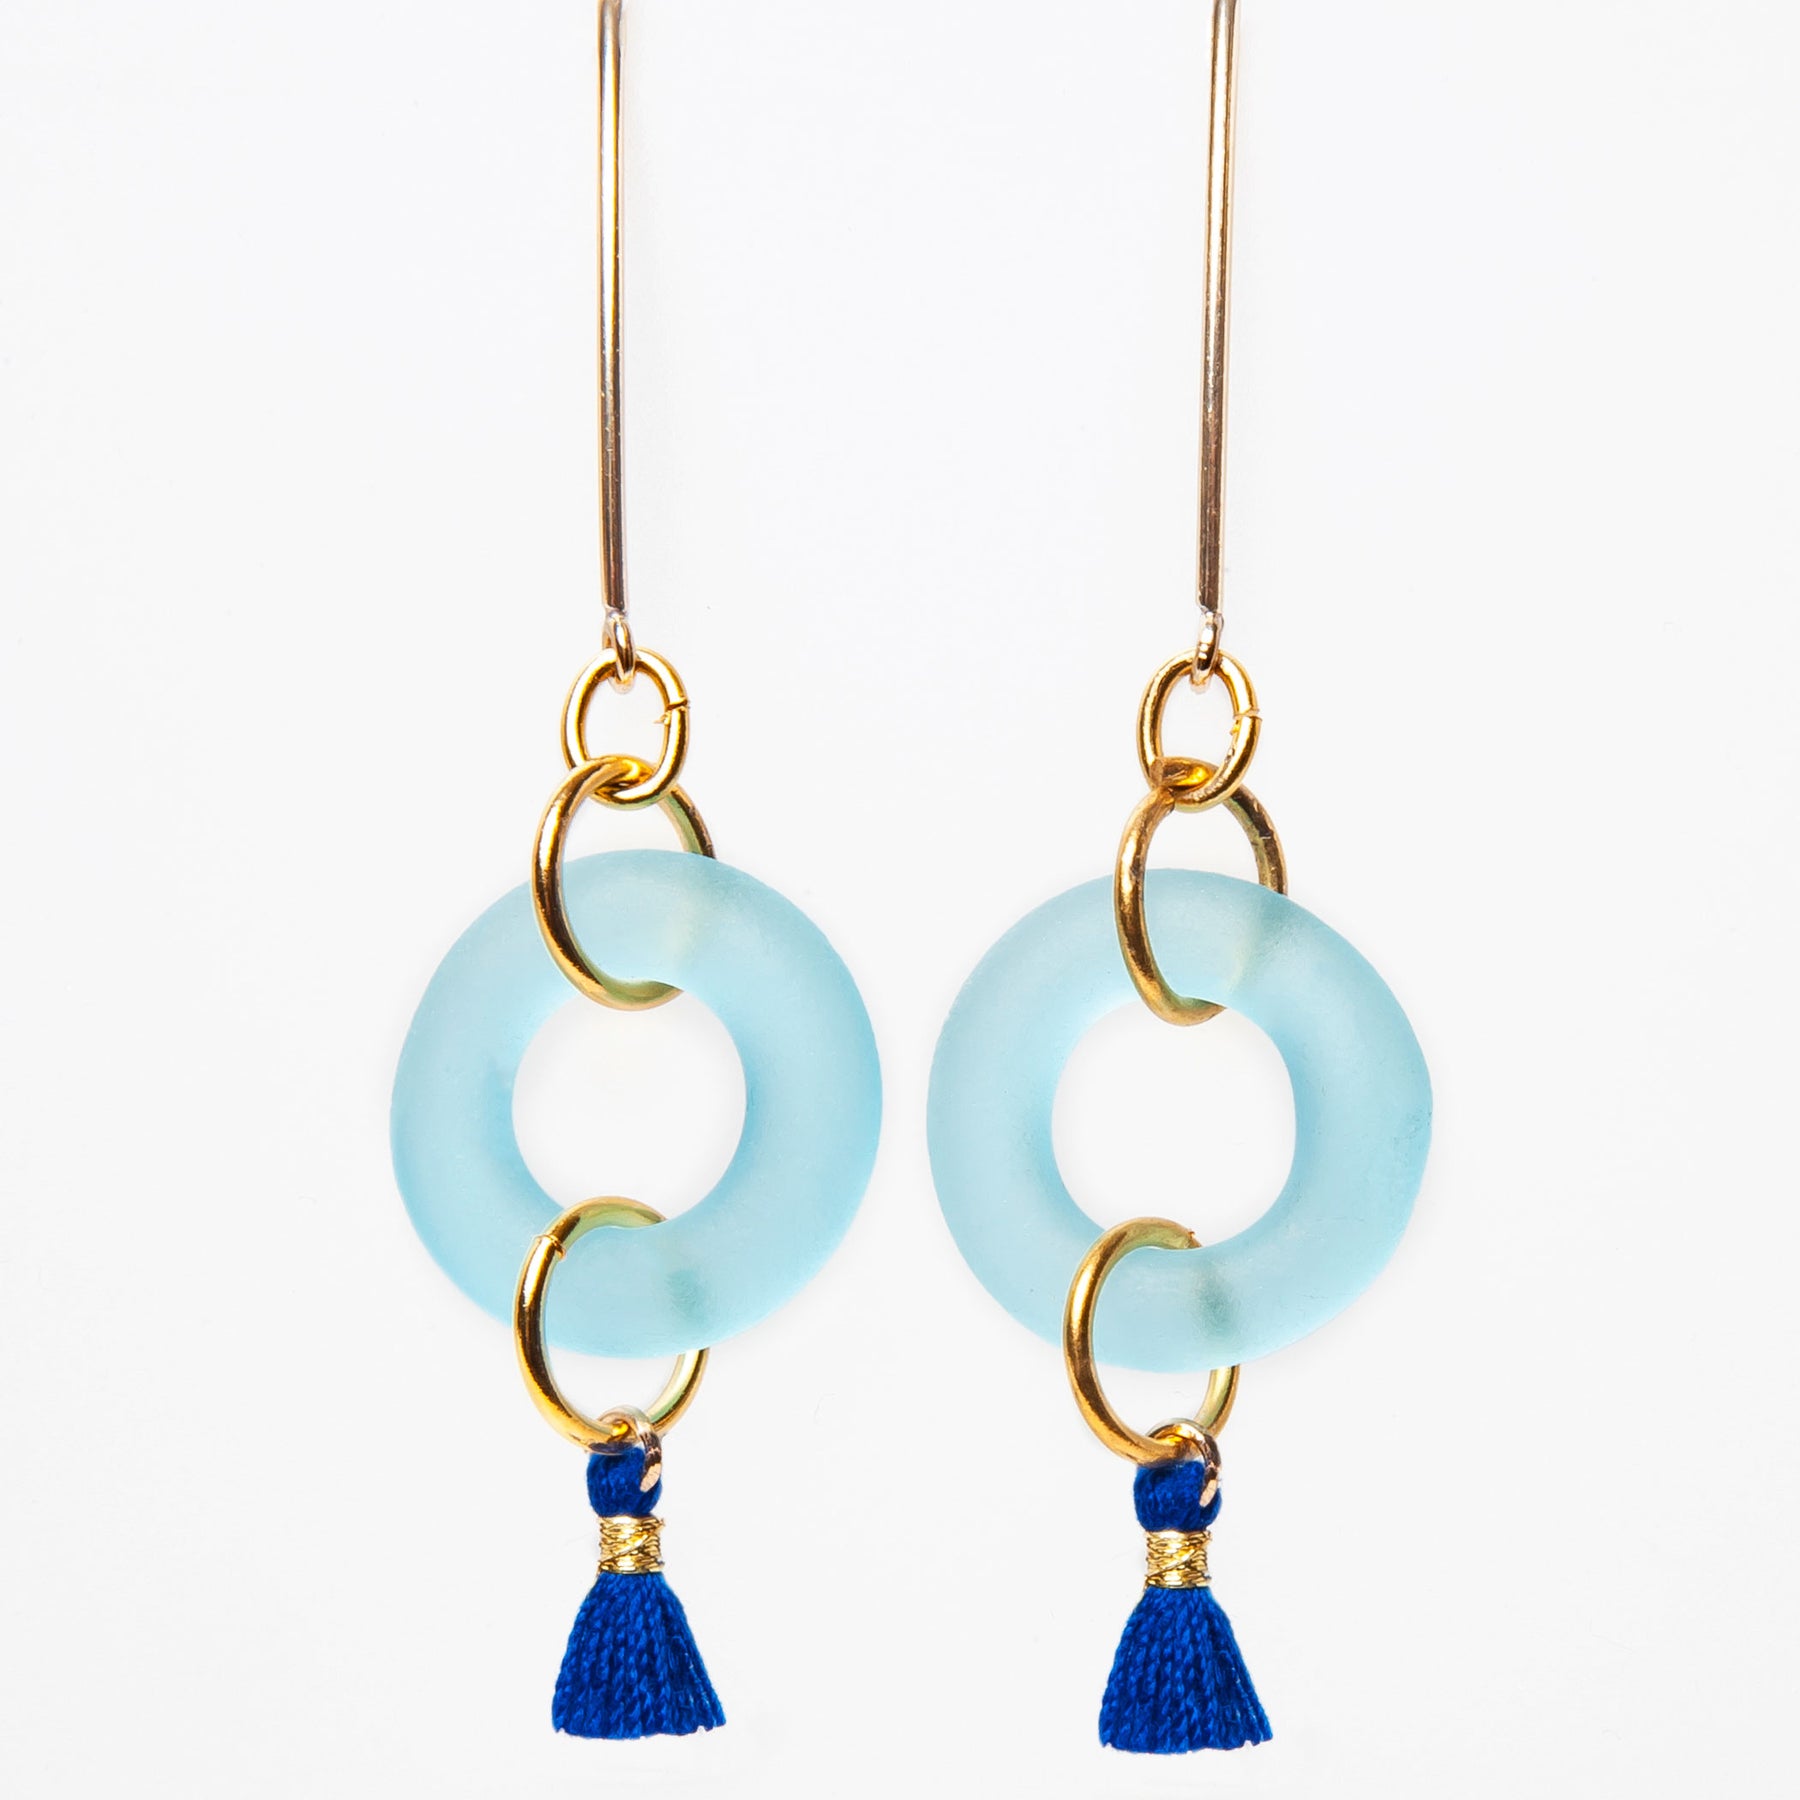 Mini Aqua Blue Glass Earrings with Colored Tassel by Smart Glass ...